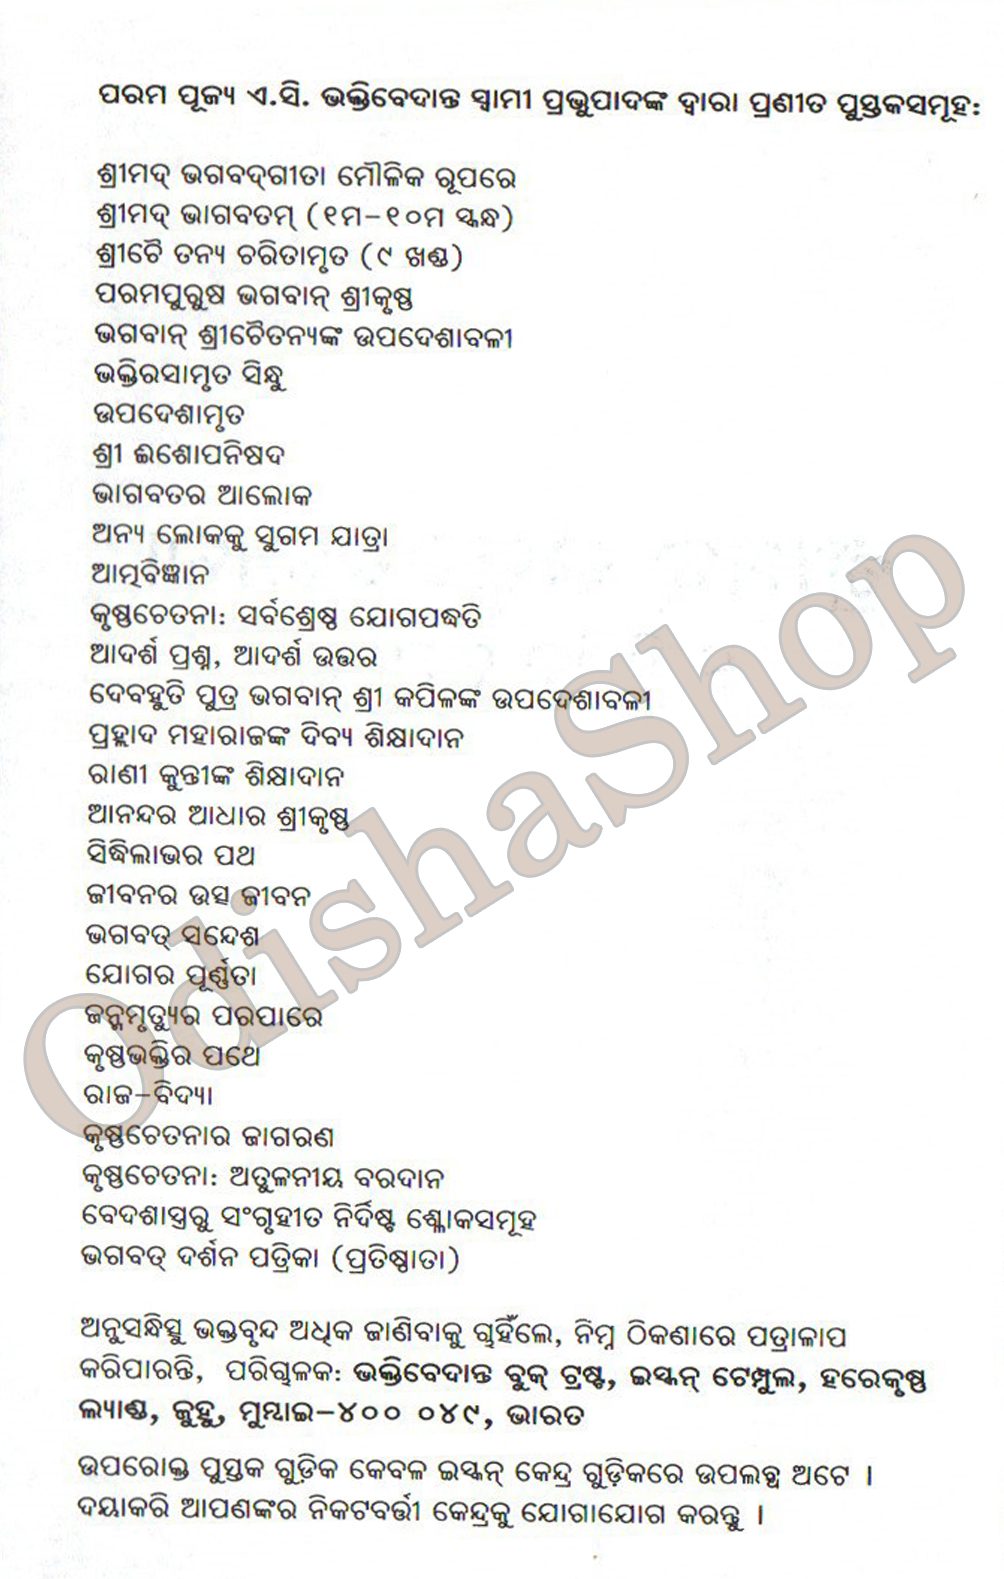 Odia Book Shrimadbhagabat Geeta From Odishashop